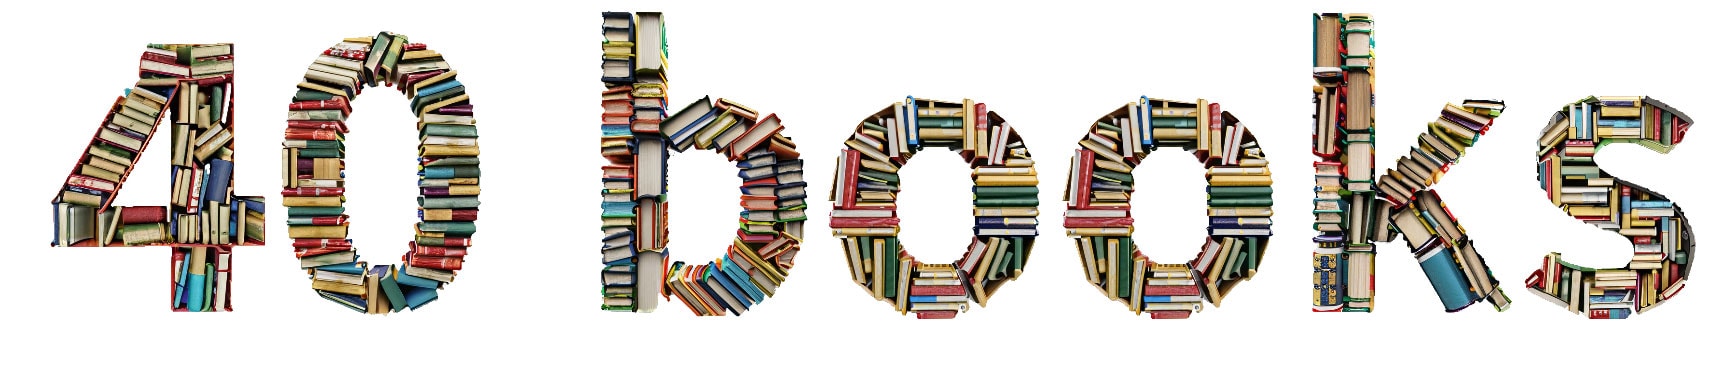 40 books